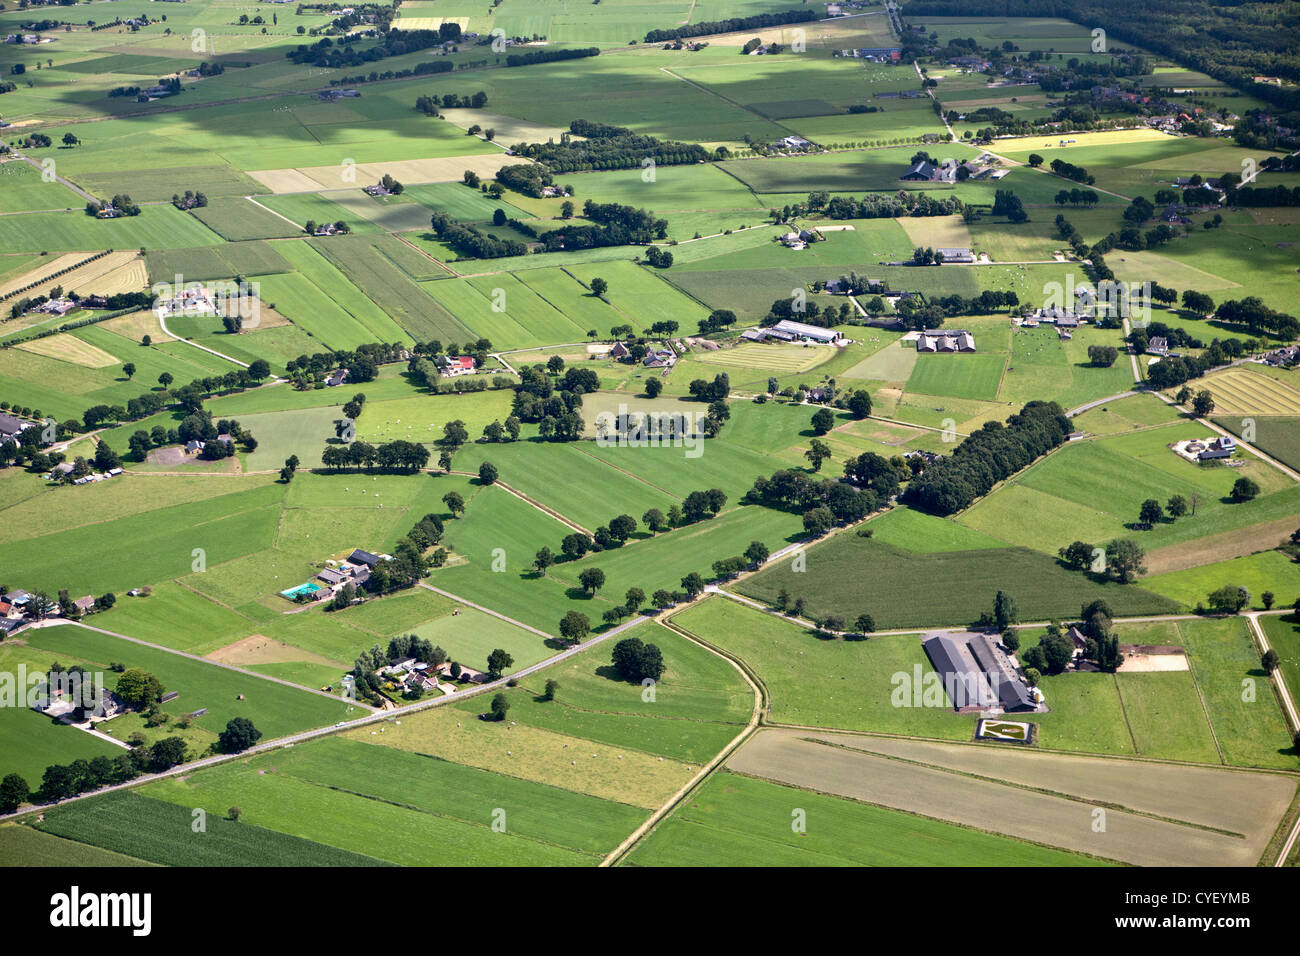 The Netherlands, Eerbeek. Farms and farmland. Aerial. Stock Photo